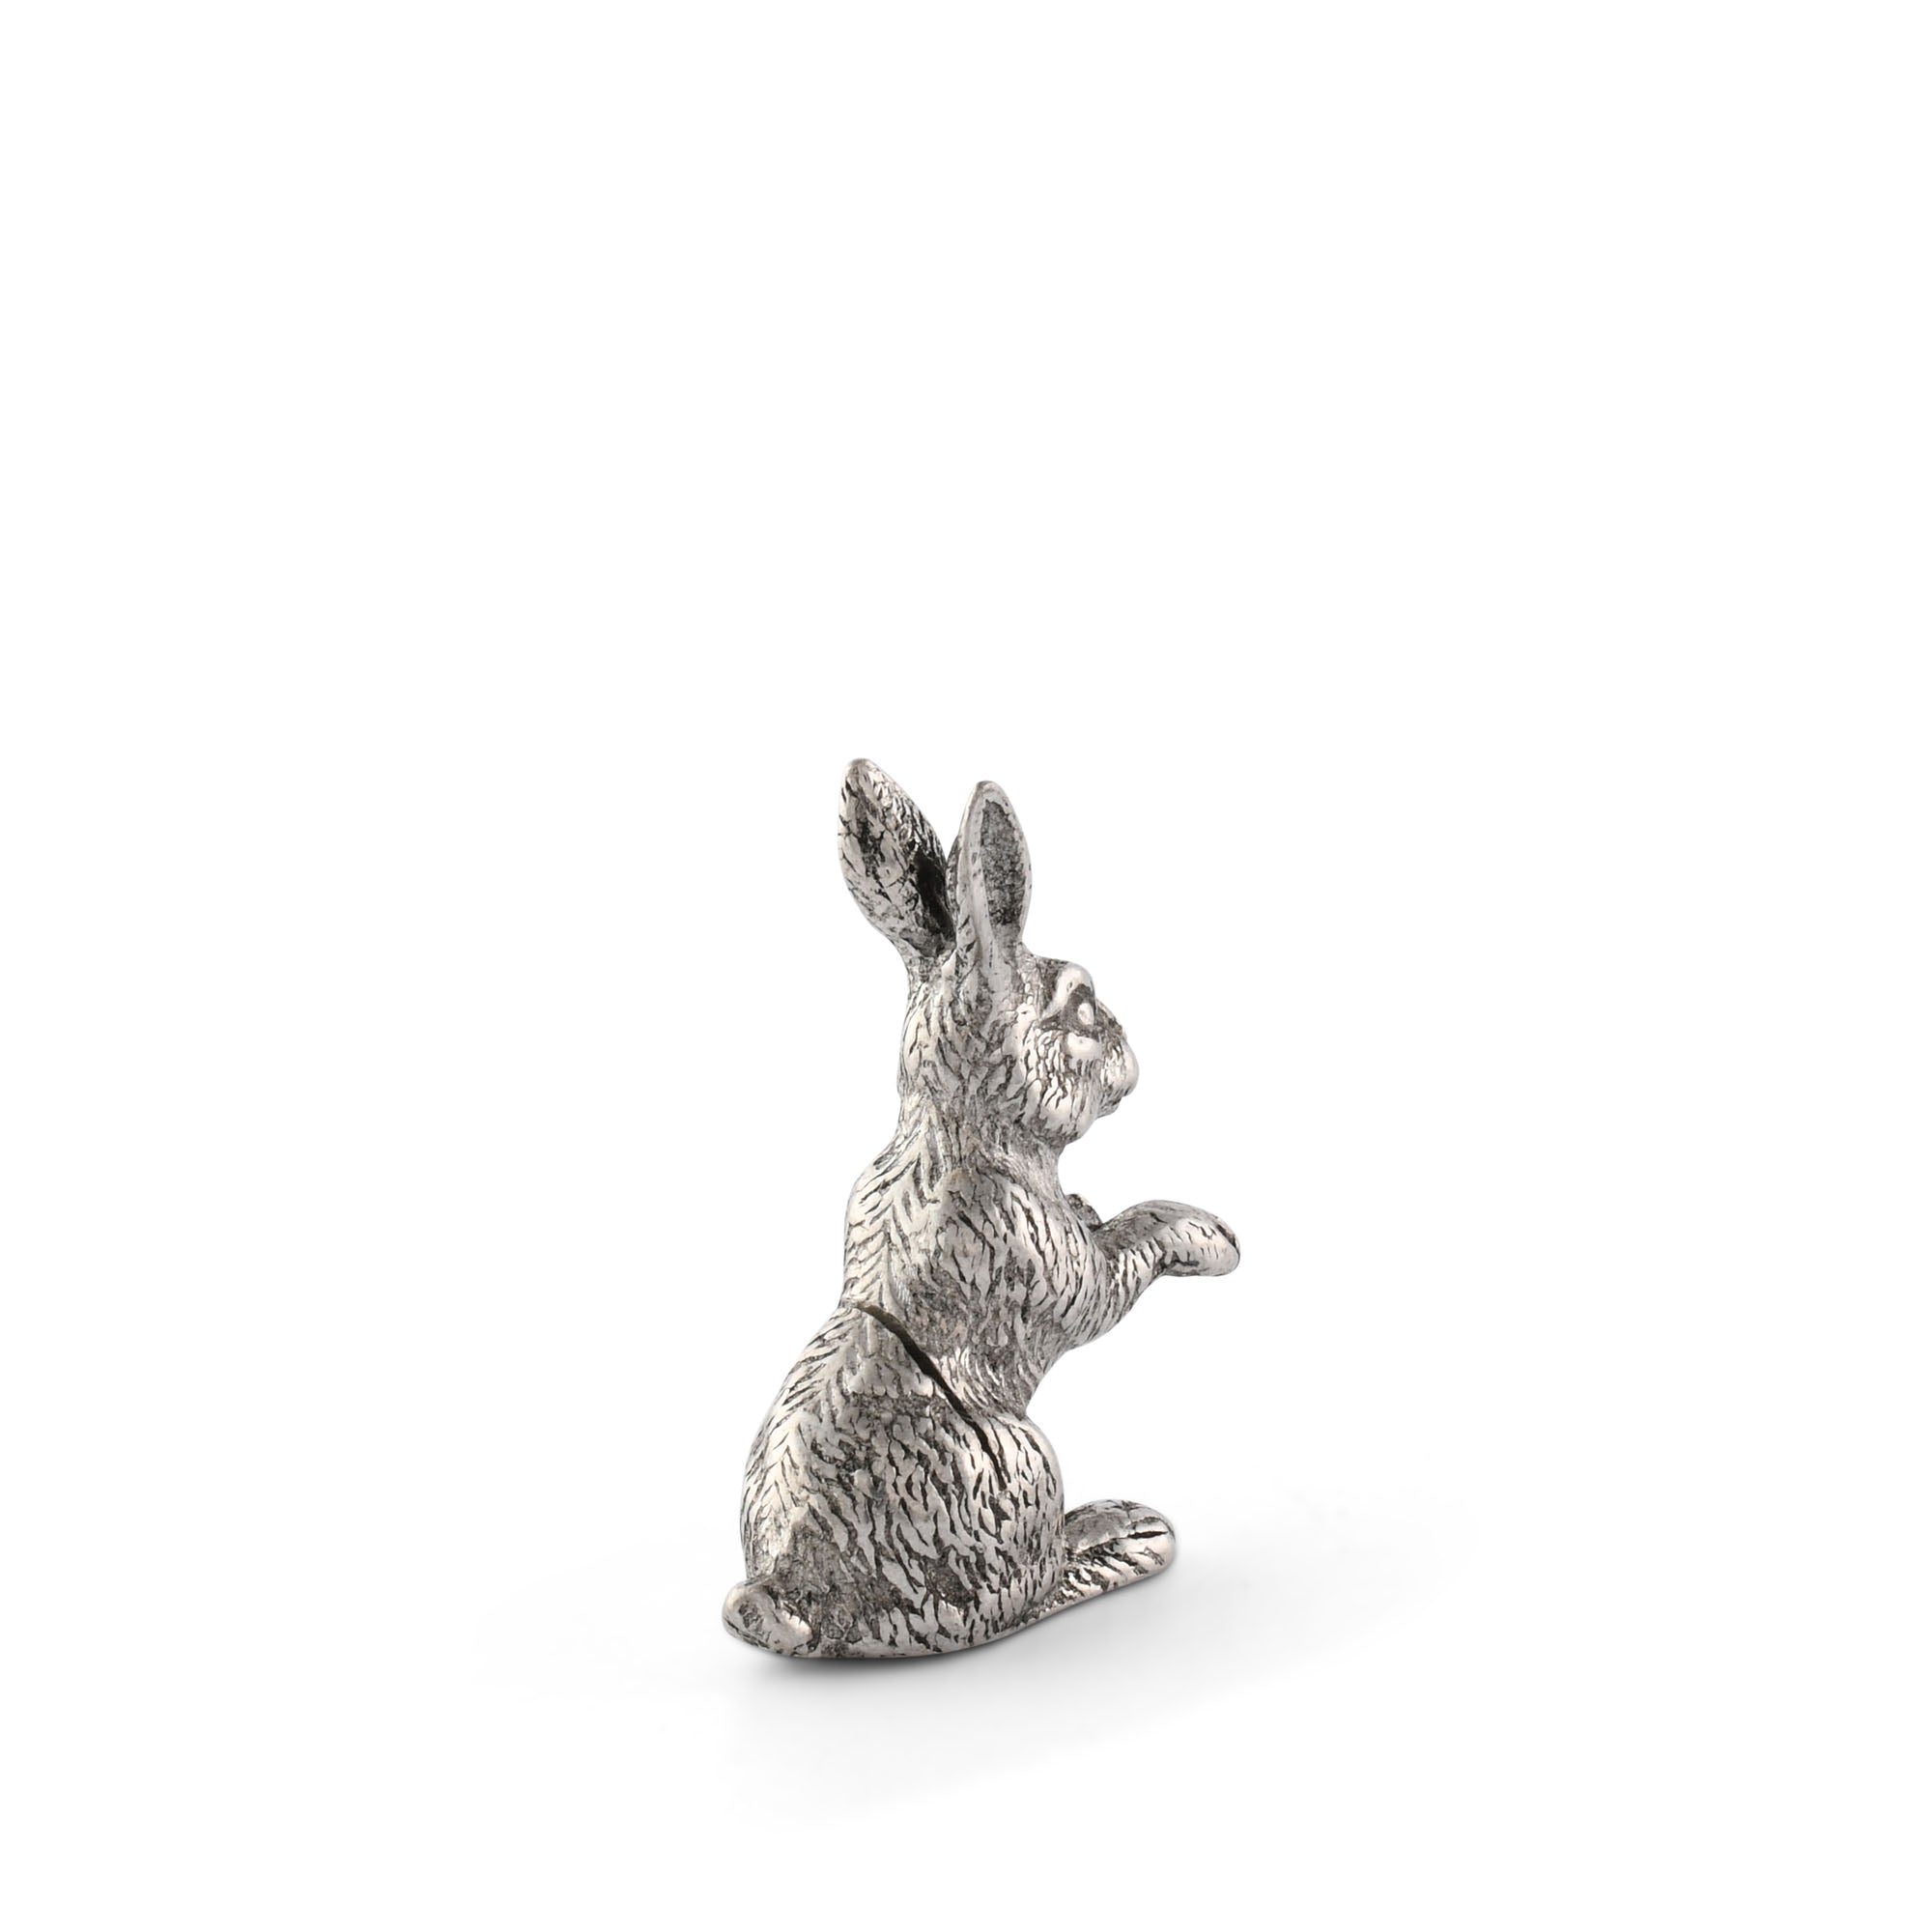 Vagabond House Rabbit Place Card Holder Product Image